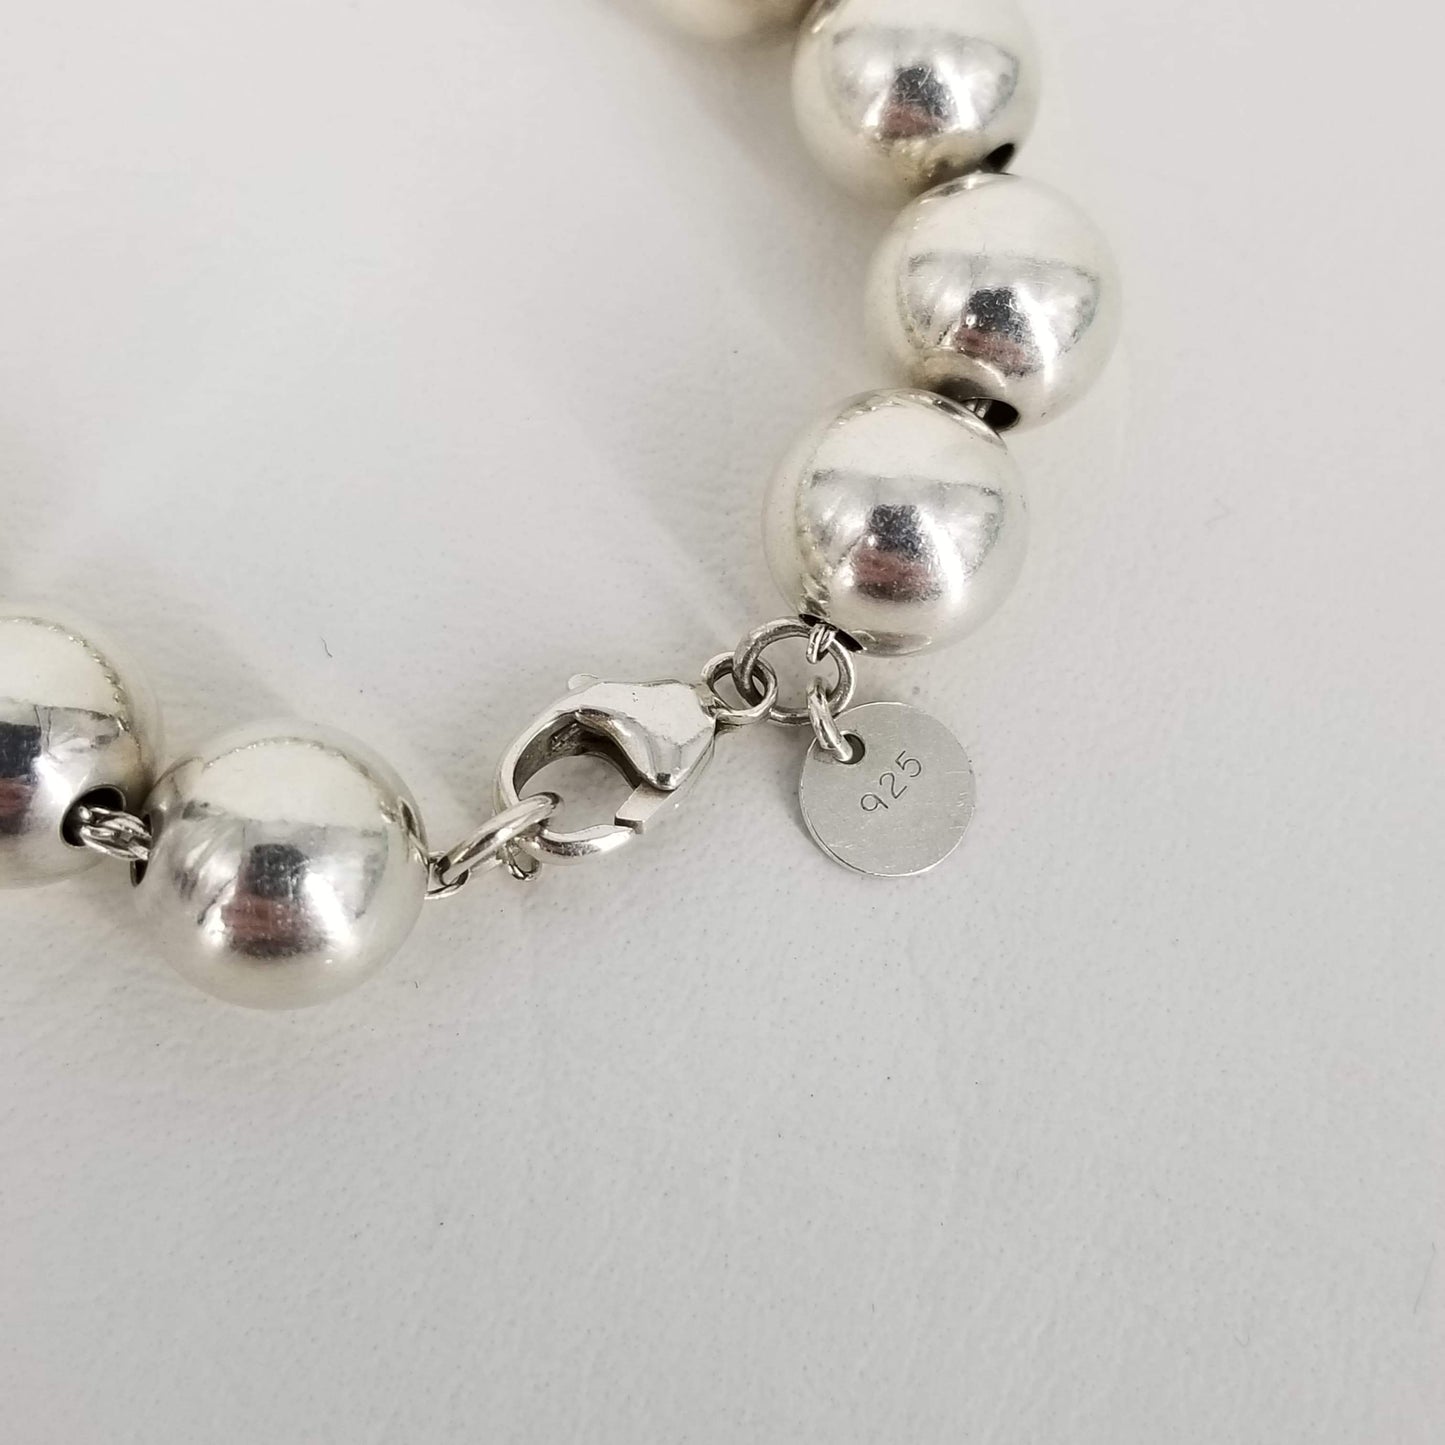 Authentic Tiffany 10mm Silver Bead Bracelet